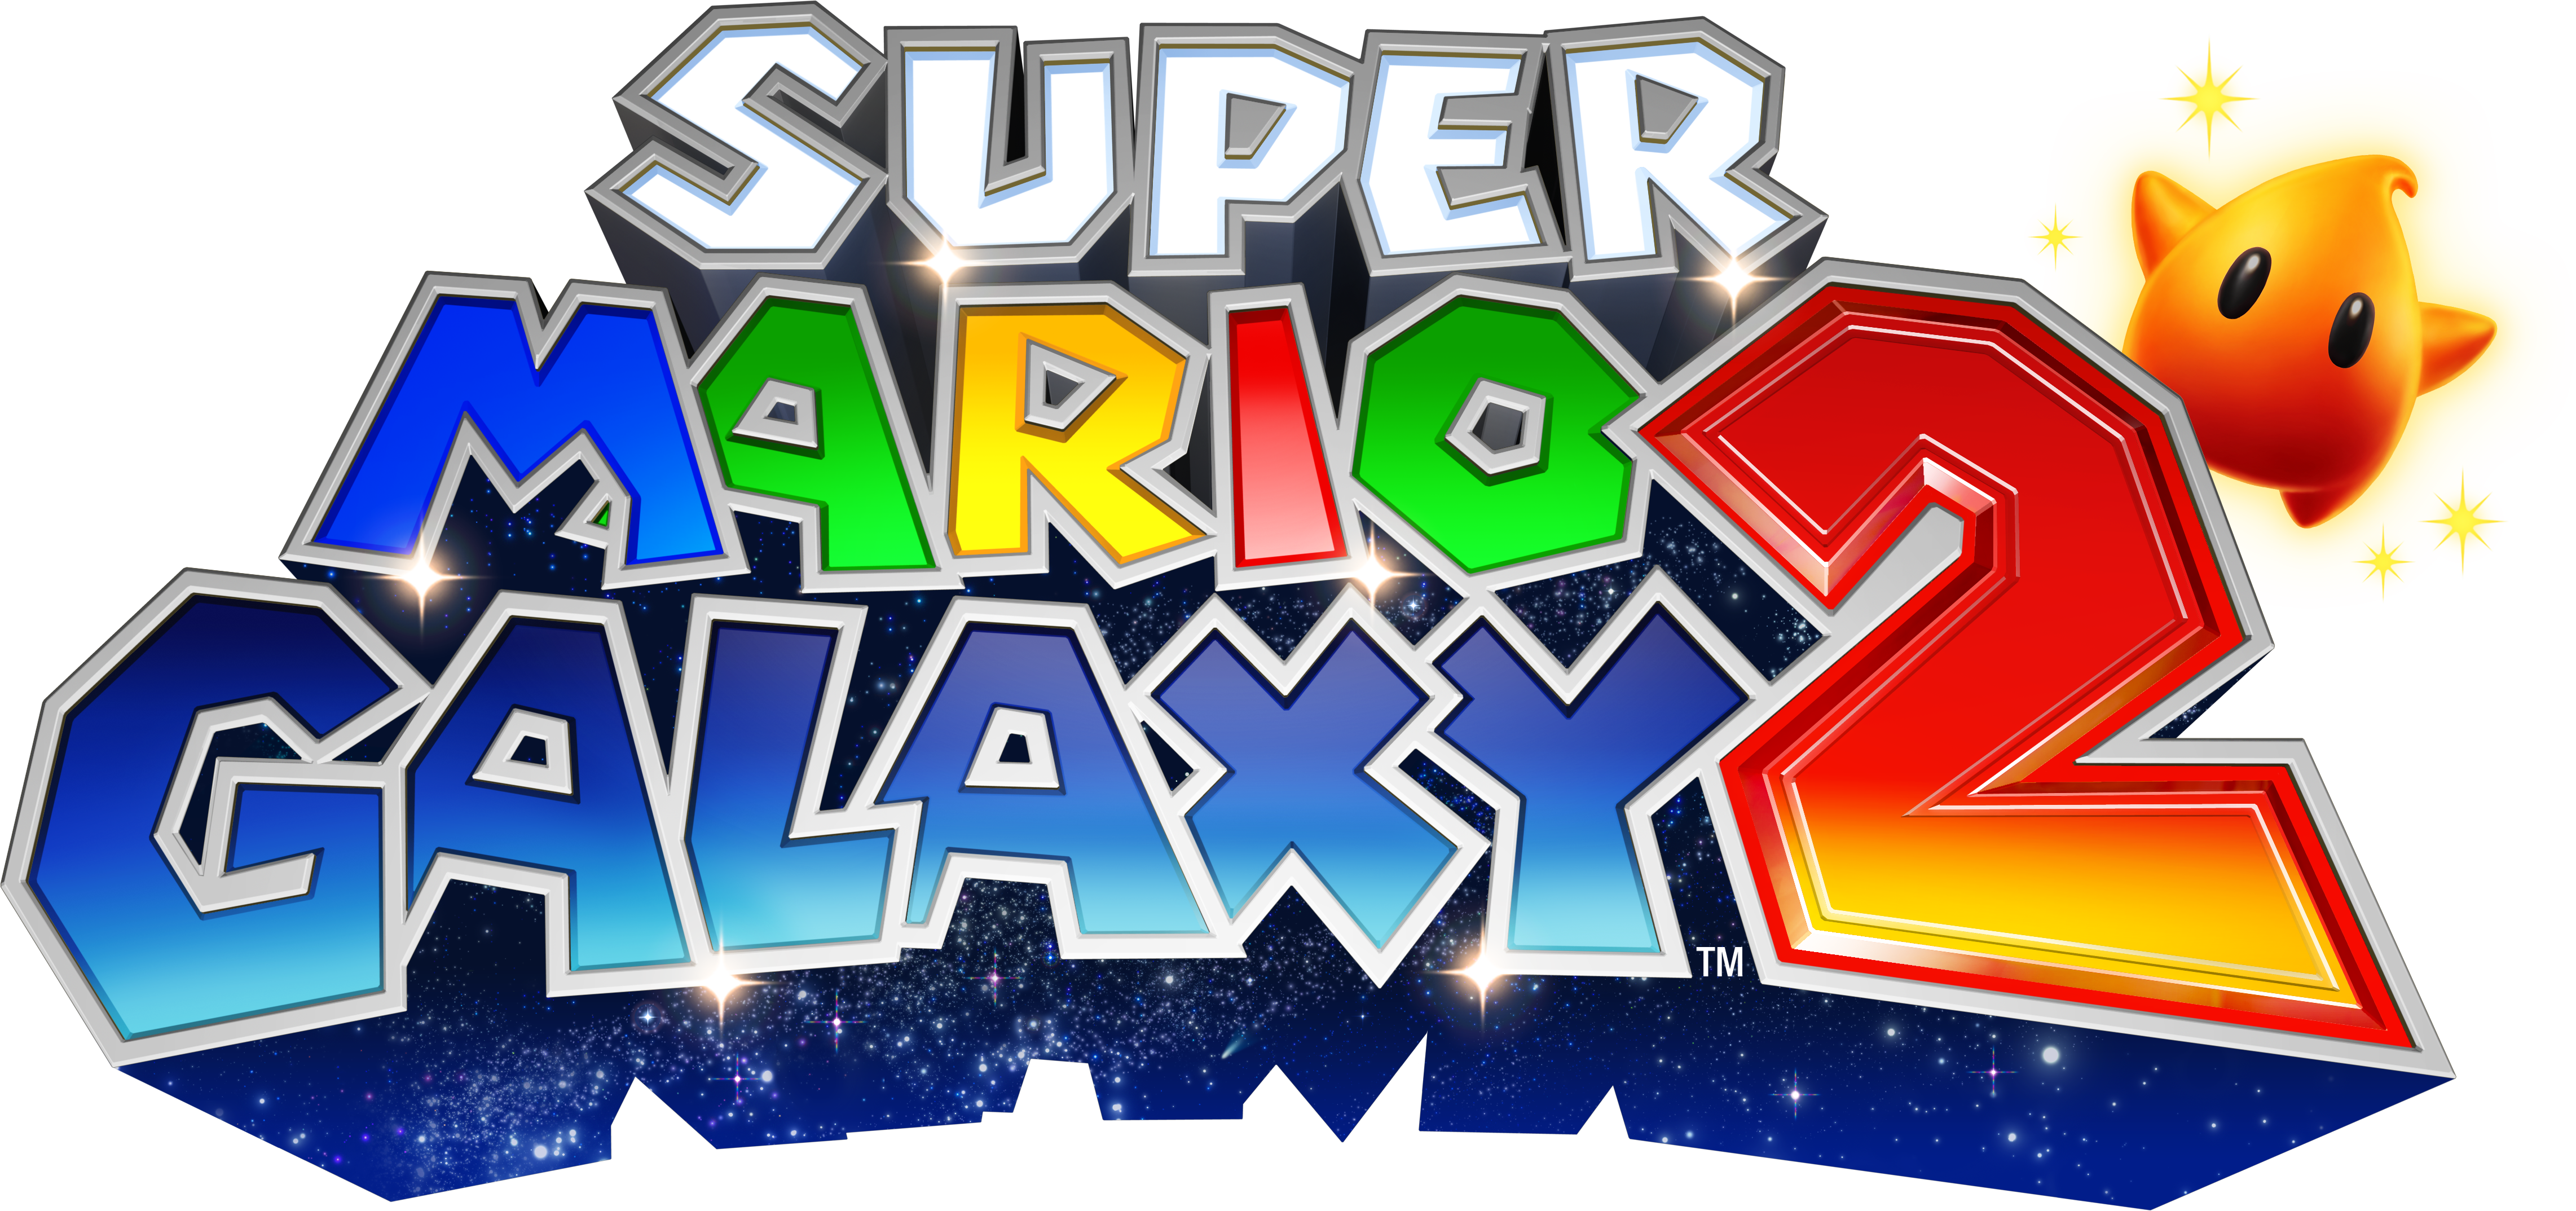 Super Mario Galaxy 2 EN logo without background